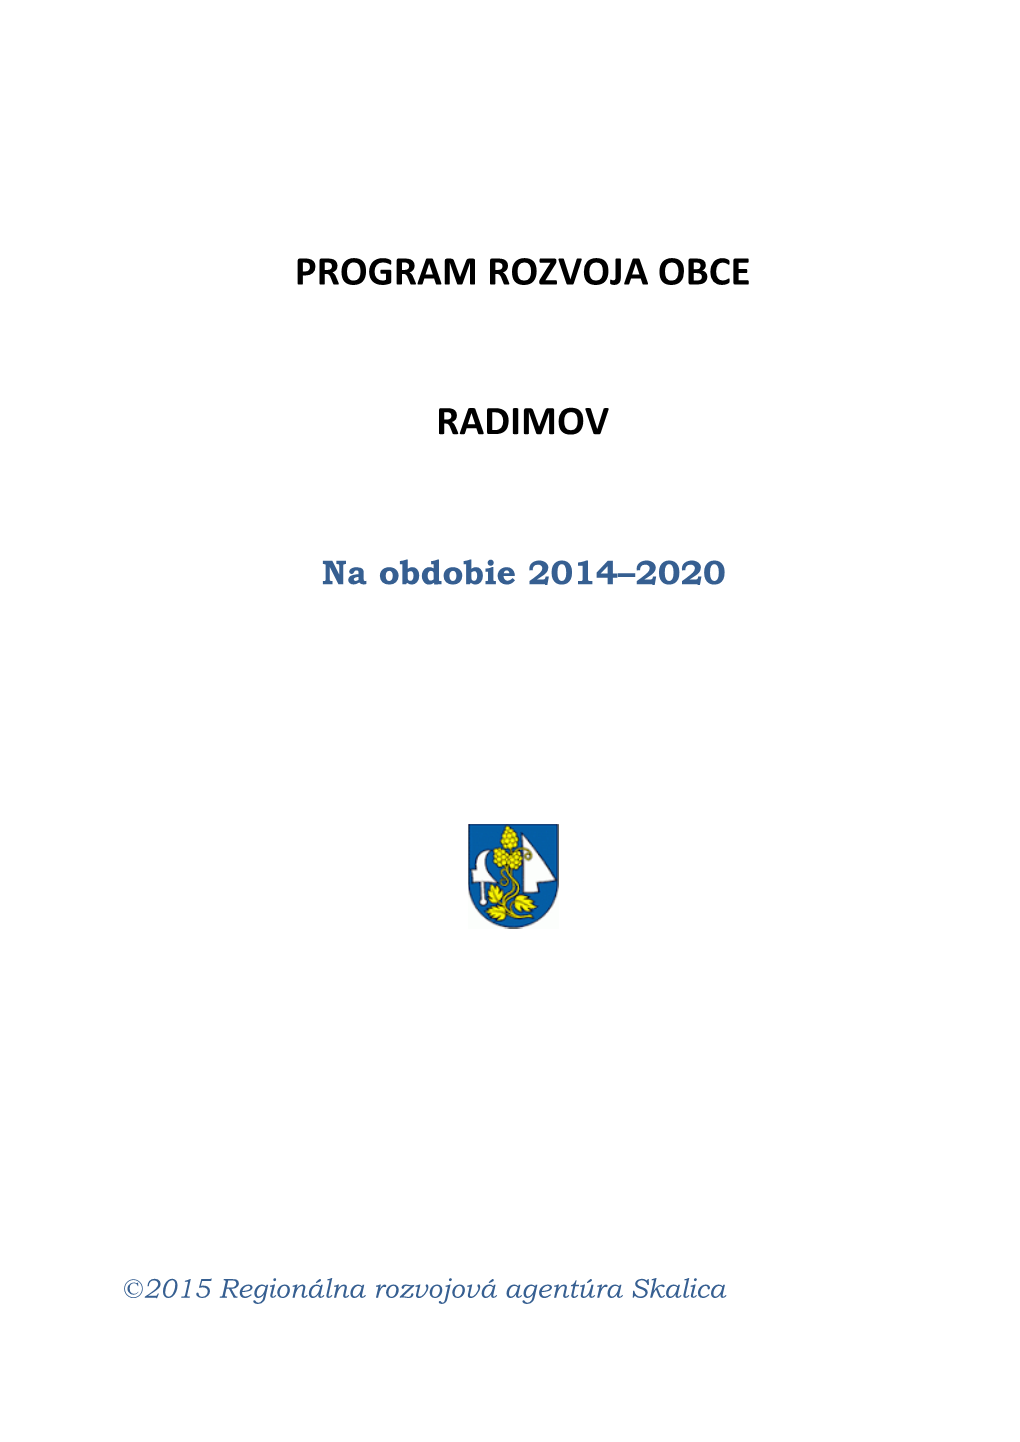 Program Rozvoja Obce Radimov 2014-2020